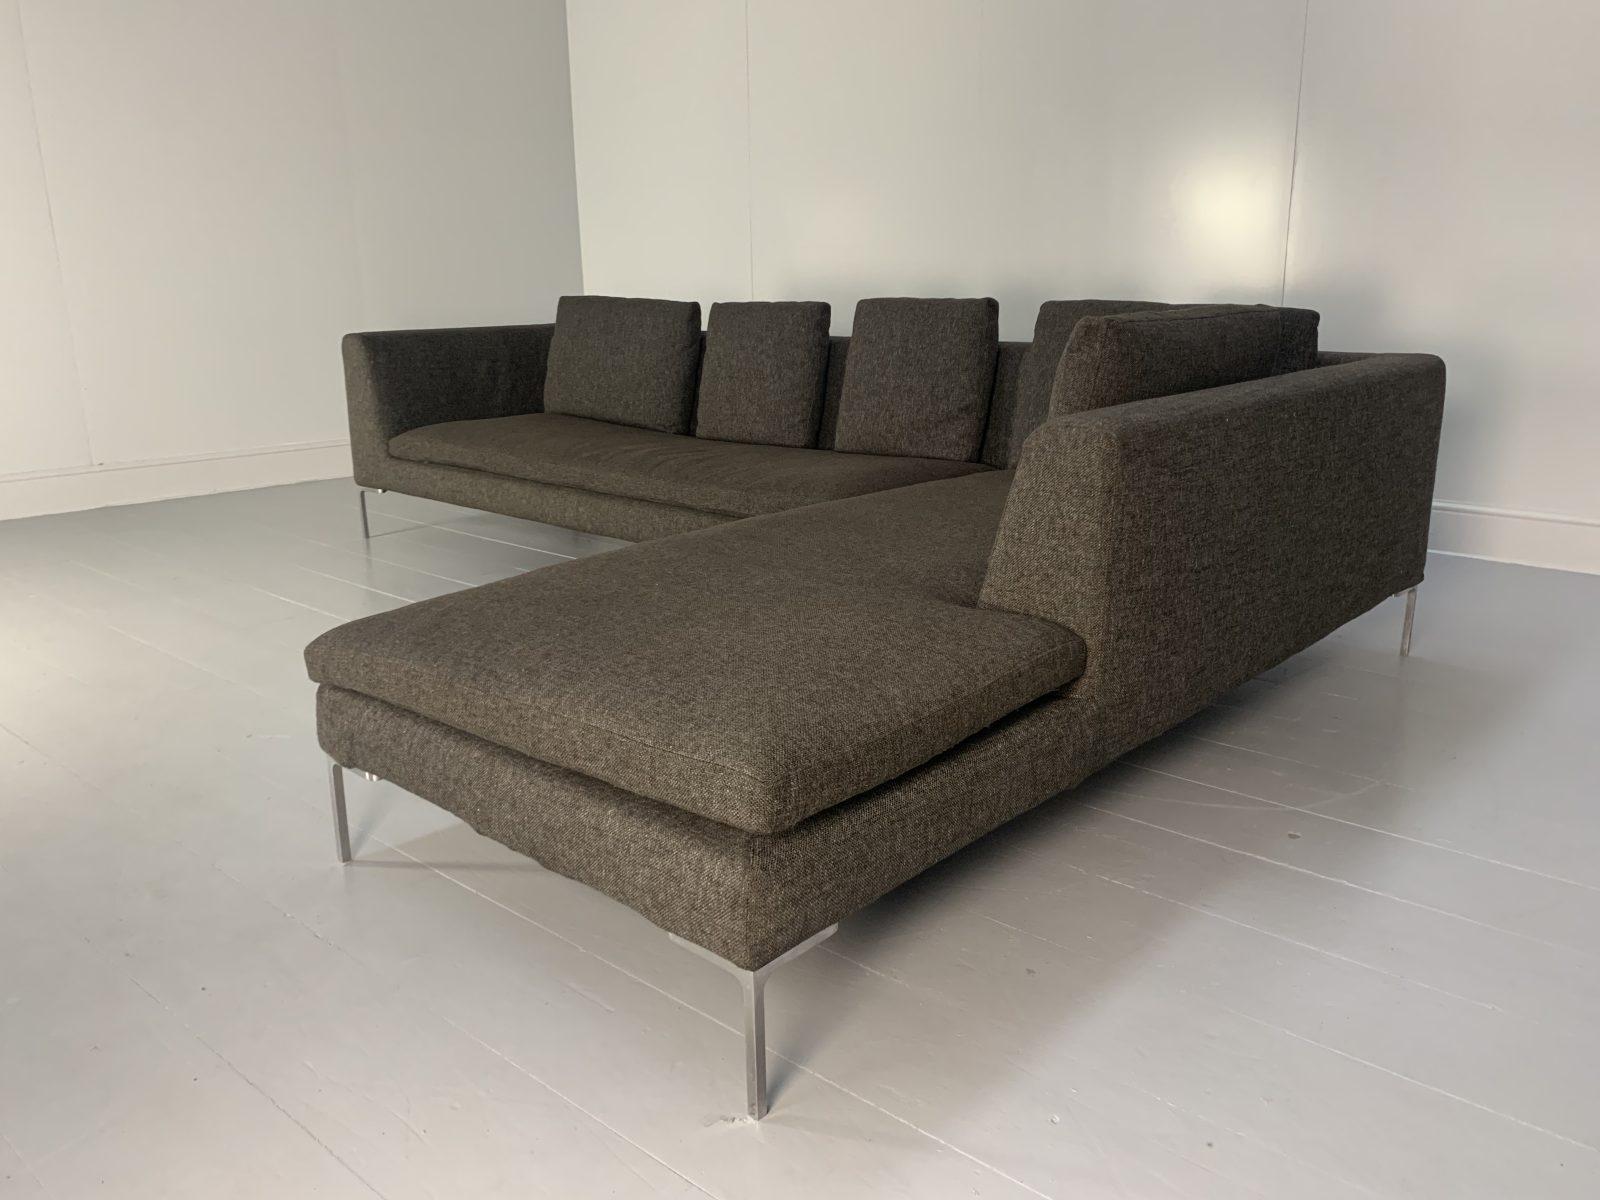 B&B Italia “Charles” L-Shape Sofa, in Dark Grey & Brown Fabric In Good Condition For Sale In Barrowford, GB